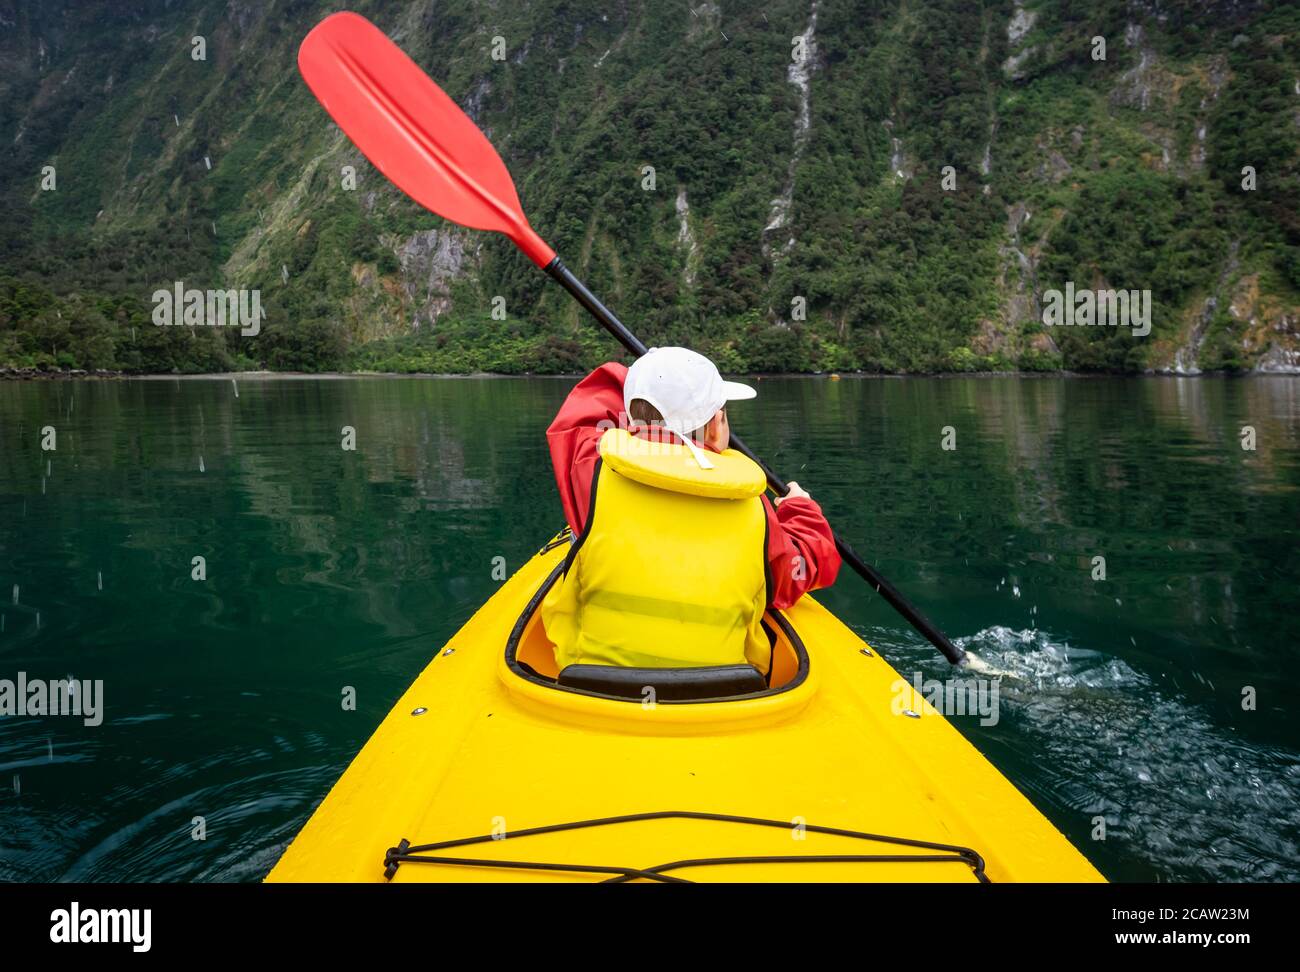 Young boy in bright yellow kayak on mountain lake. Stock Photo